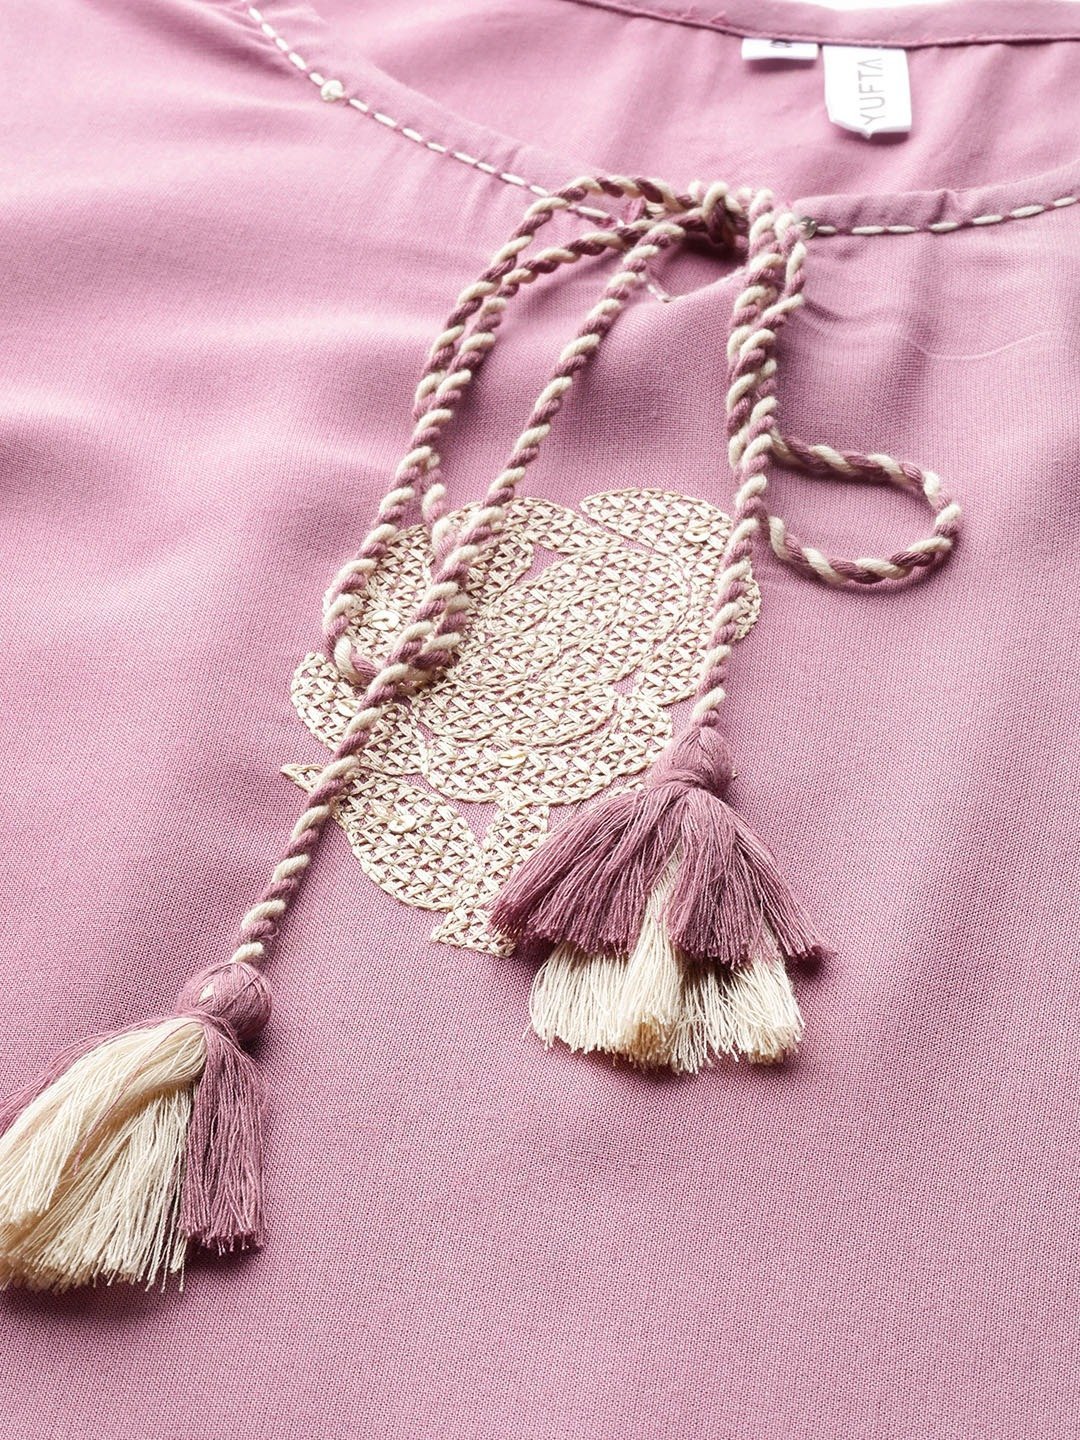 Women's Pink & Offwhite Embroidered Kurta Set - Yufta